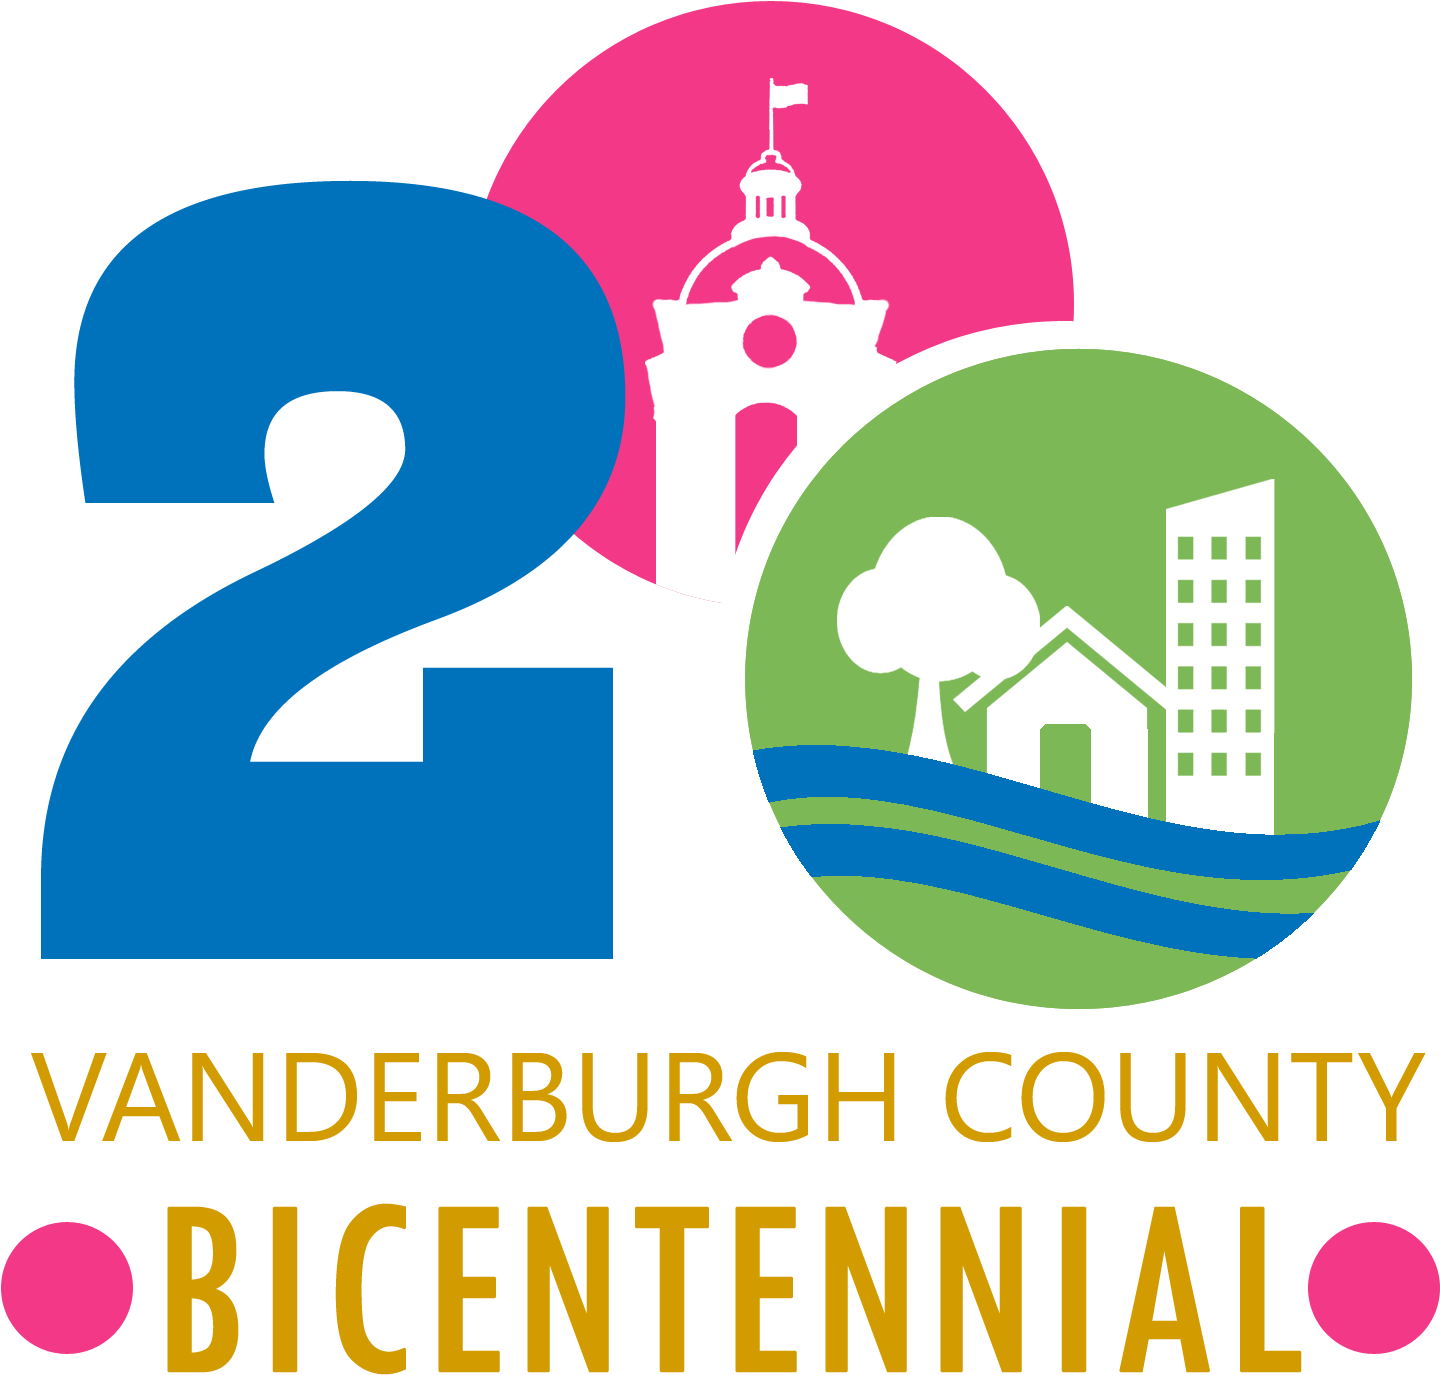 Bicentennial Logo - Vanderburgh County, Indiana (1776x1605)